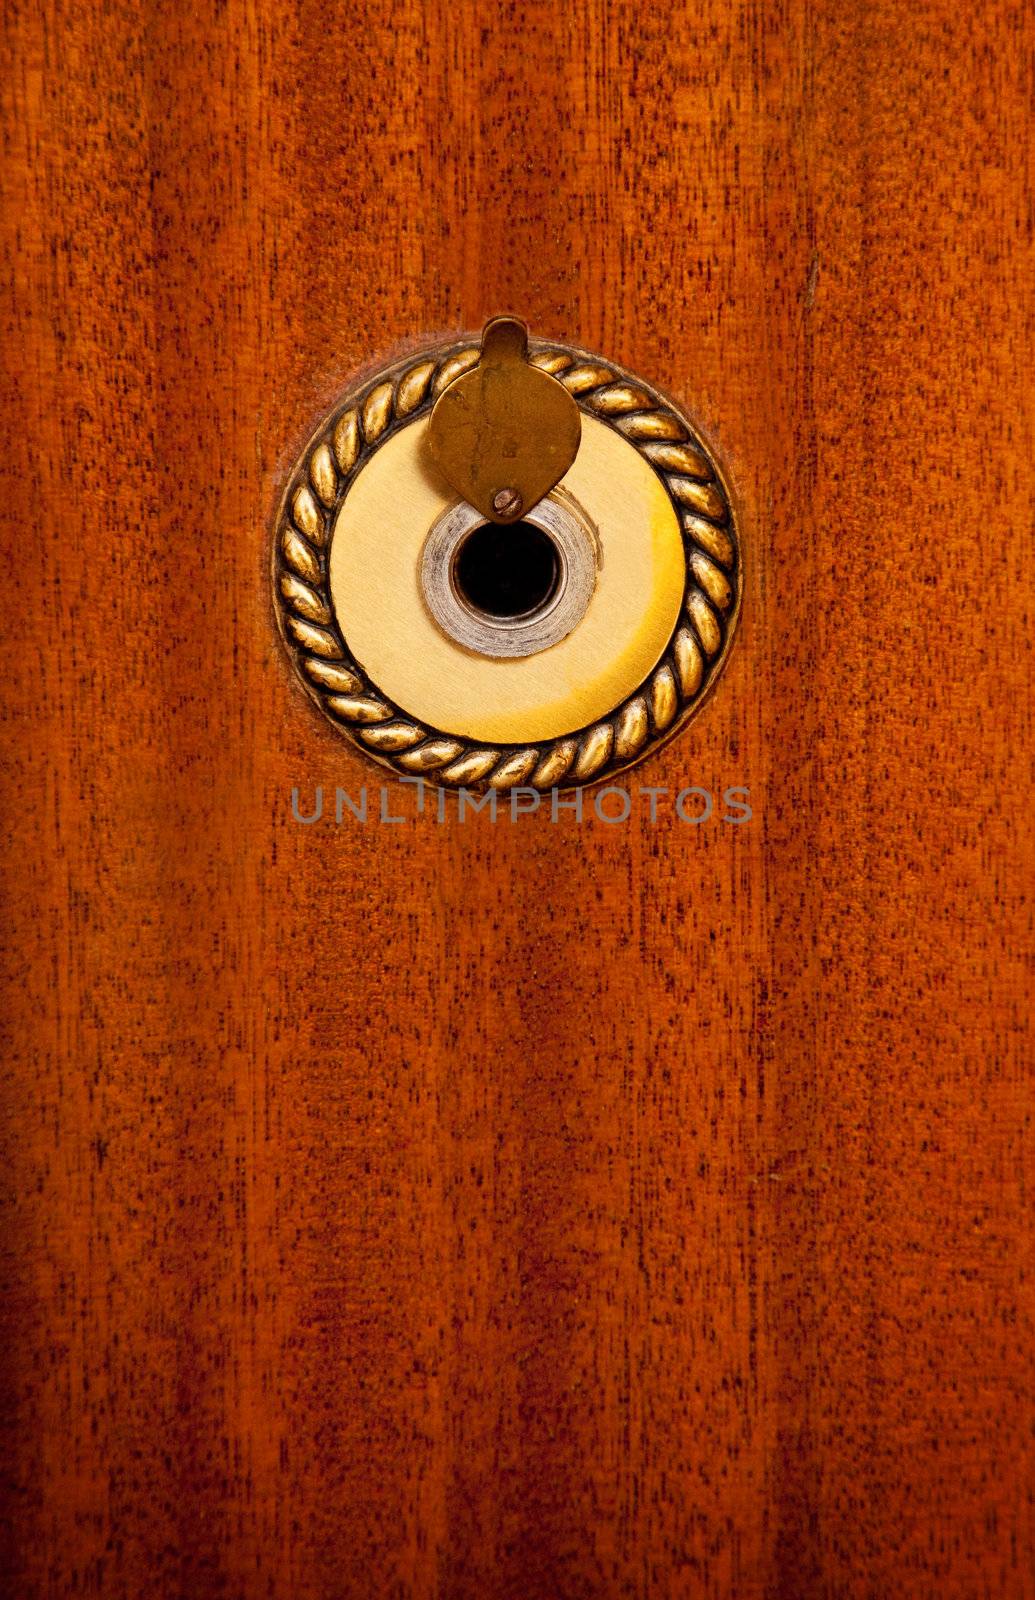 peephole by carloscastilla